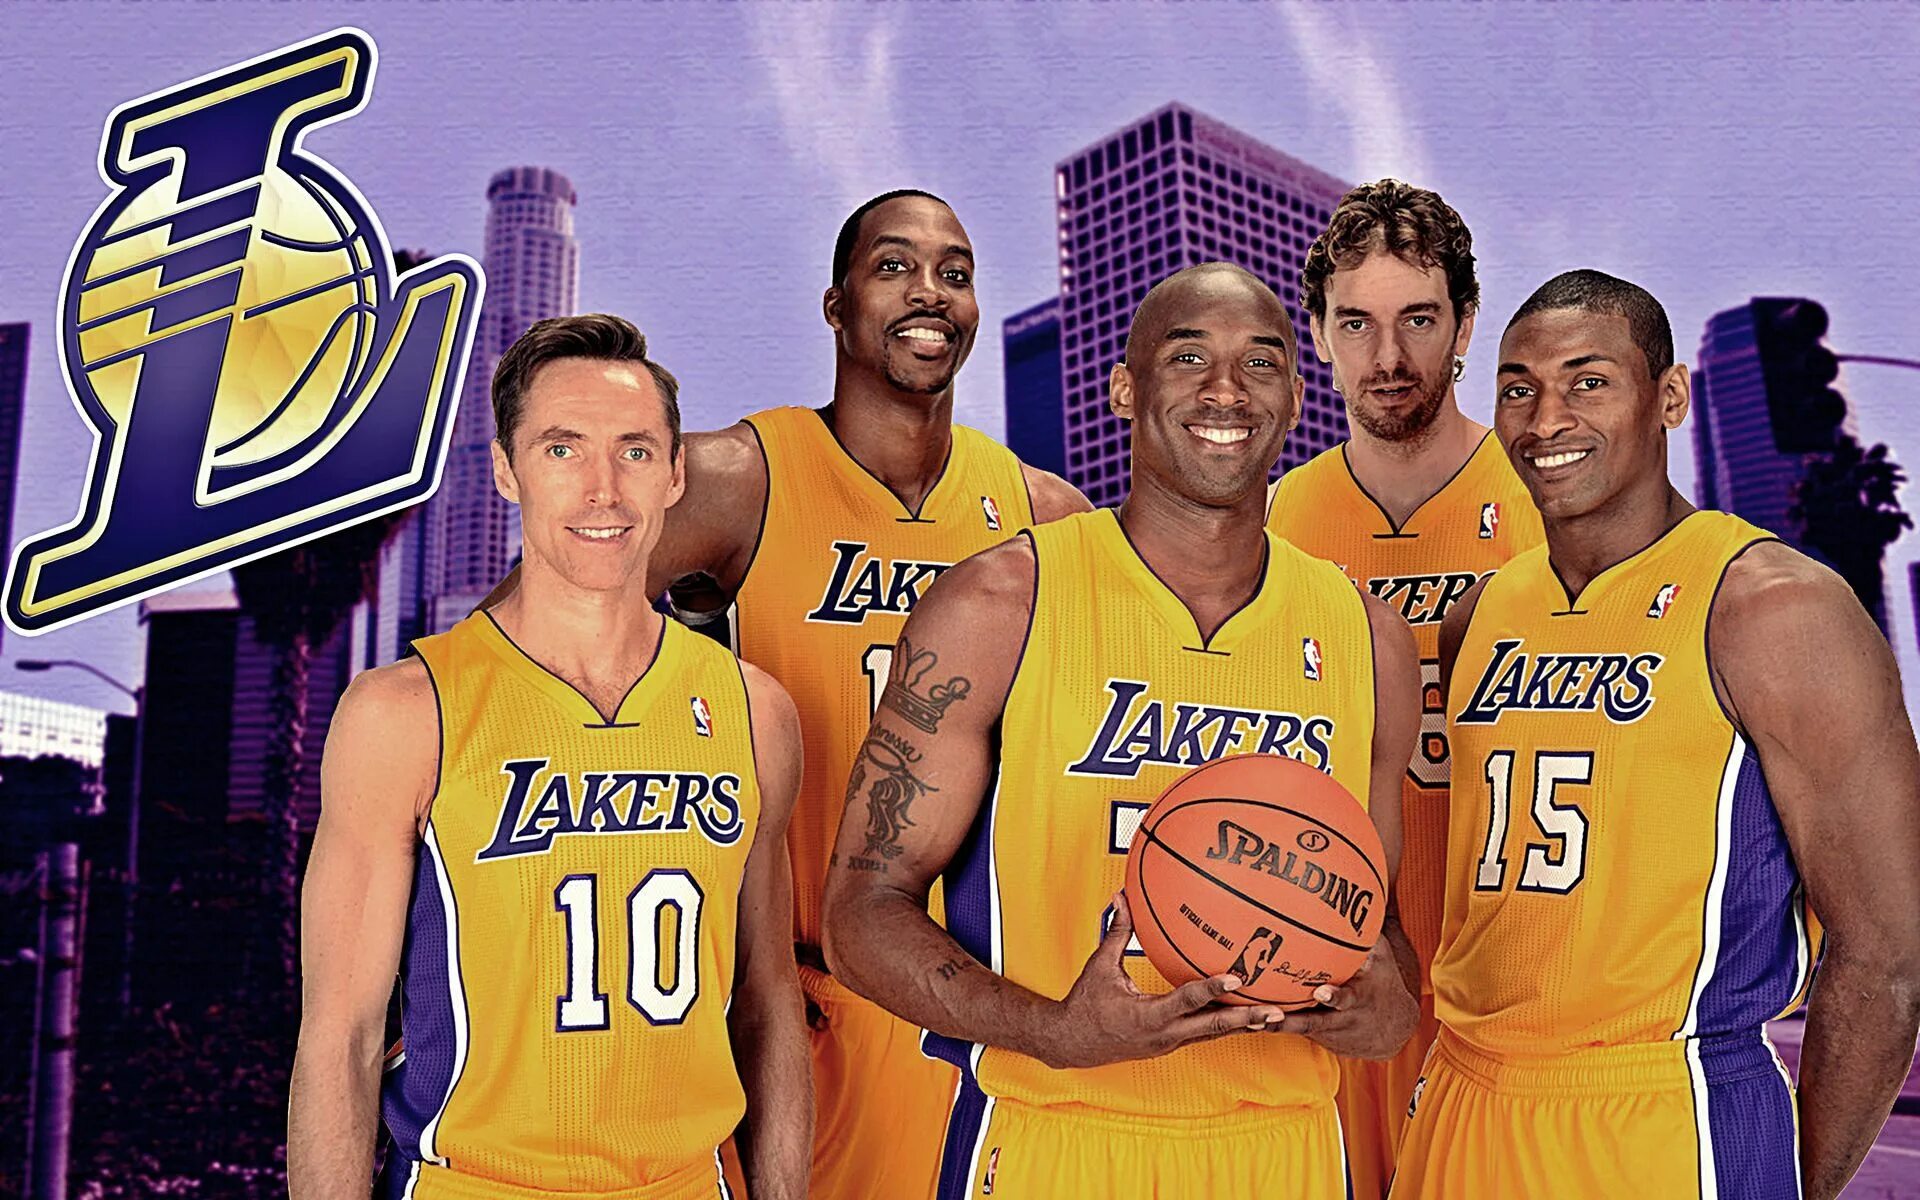 La lakers. Коби Брайант. Команда Лейкерс. Лос-Анджелес Лейкерс. Kobe Bryant los Angeles Lakers.